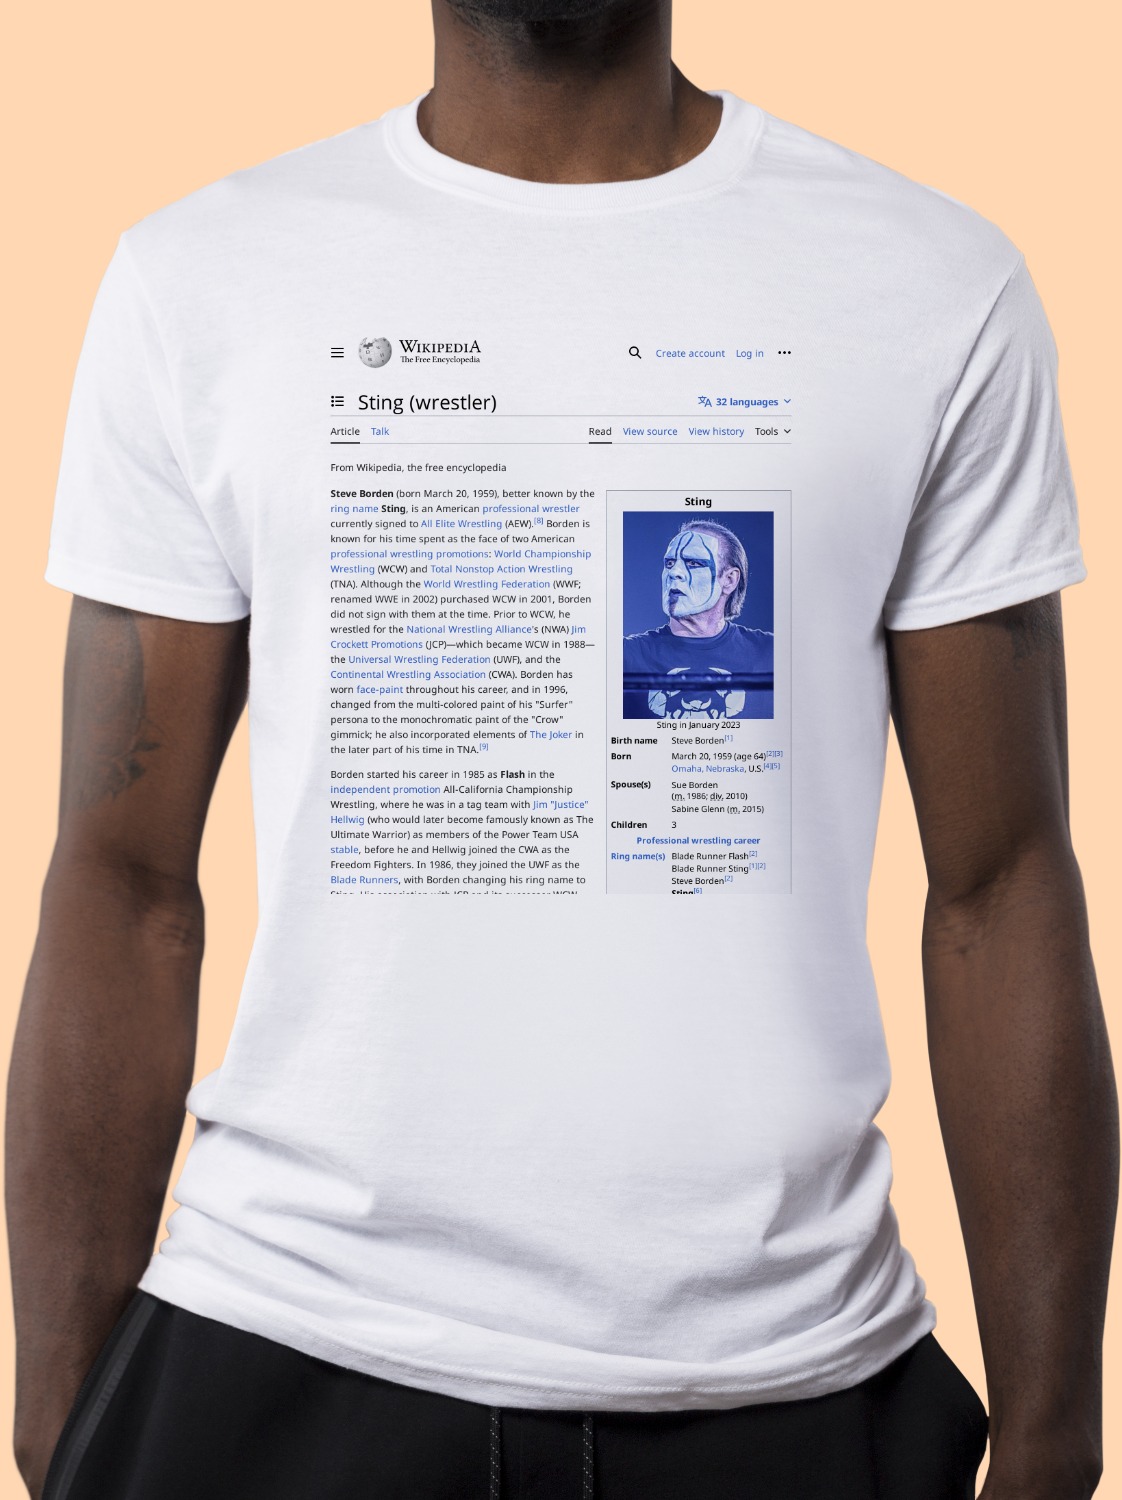 Sting_(wrestler) Wikipedia Shirt